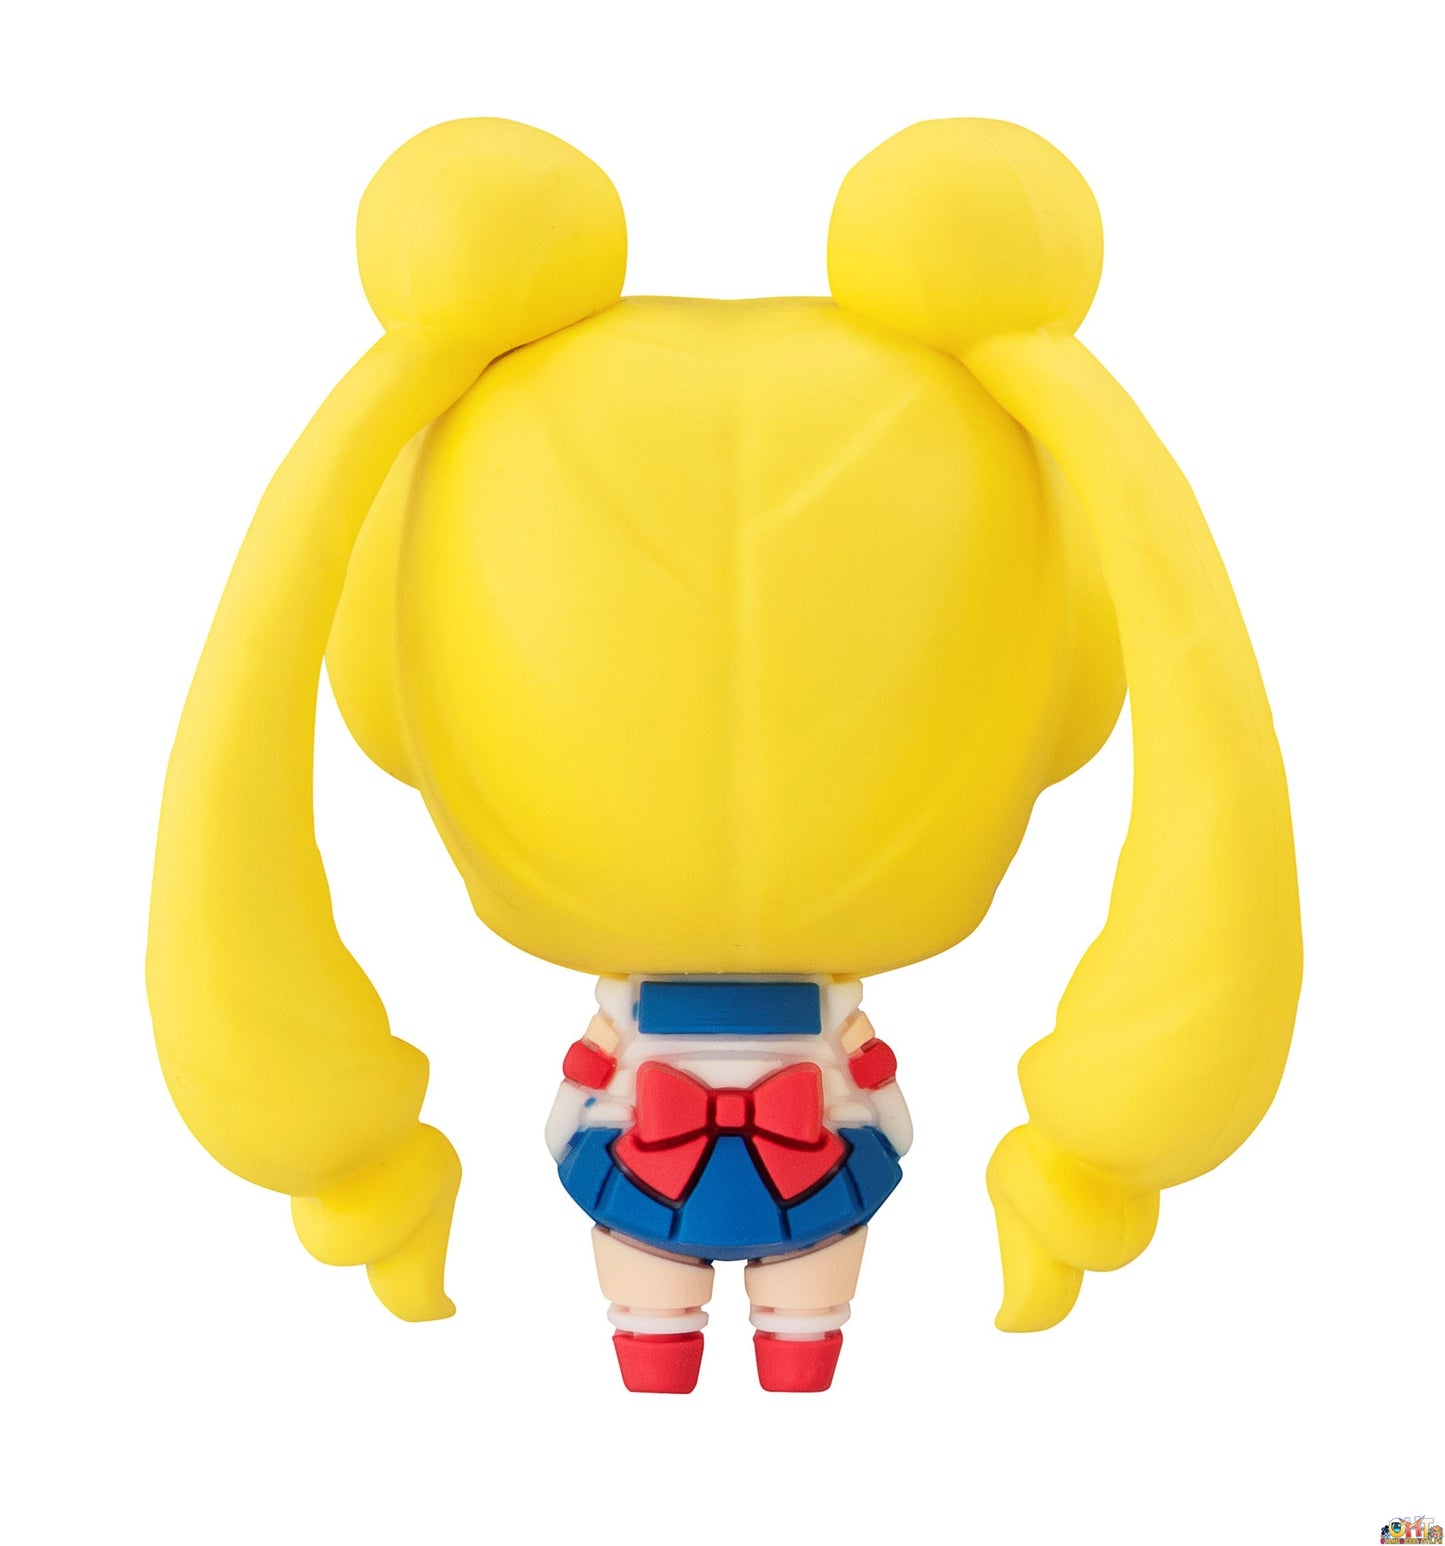 Megahouse Chokorin Mascot Sailor Moon